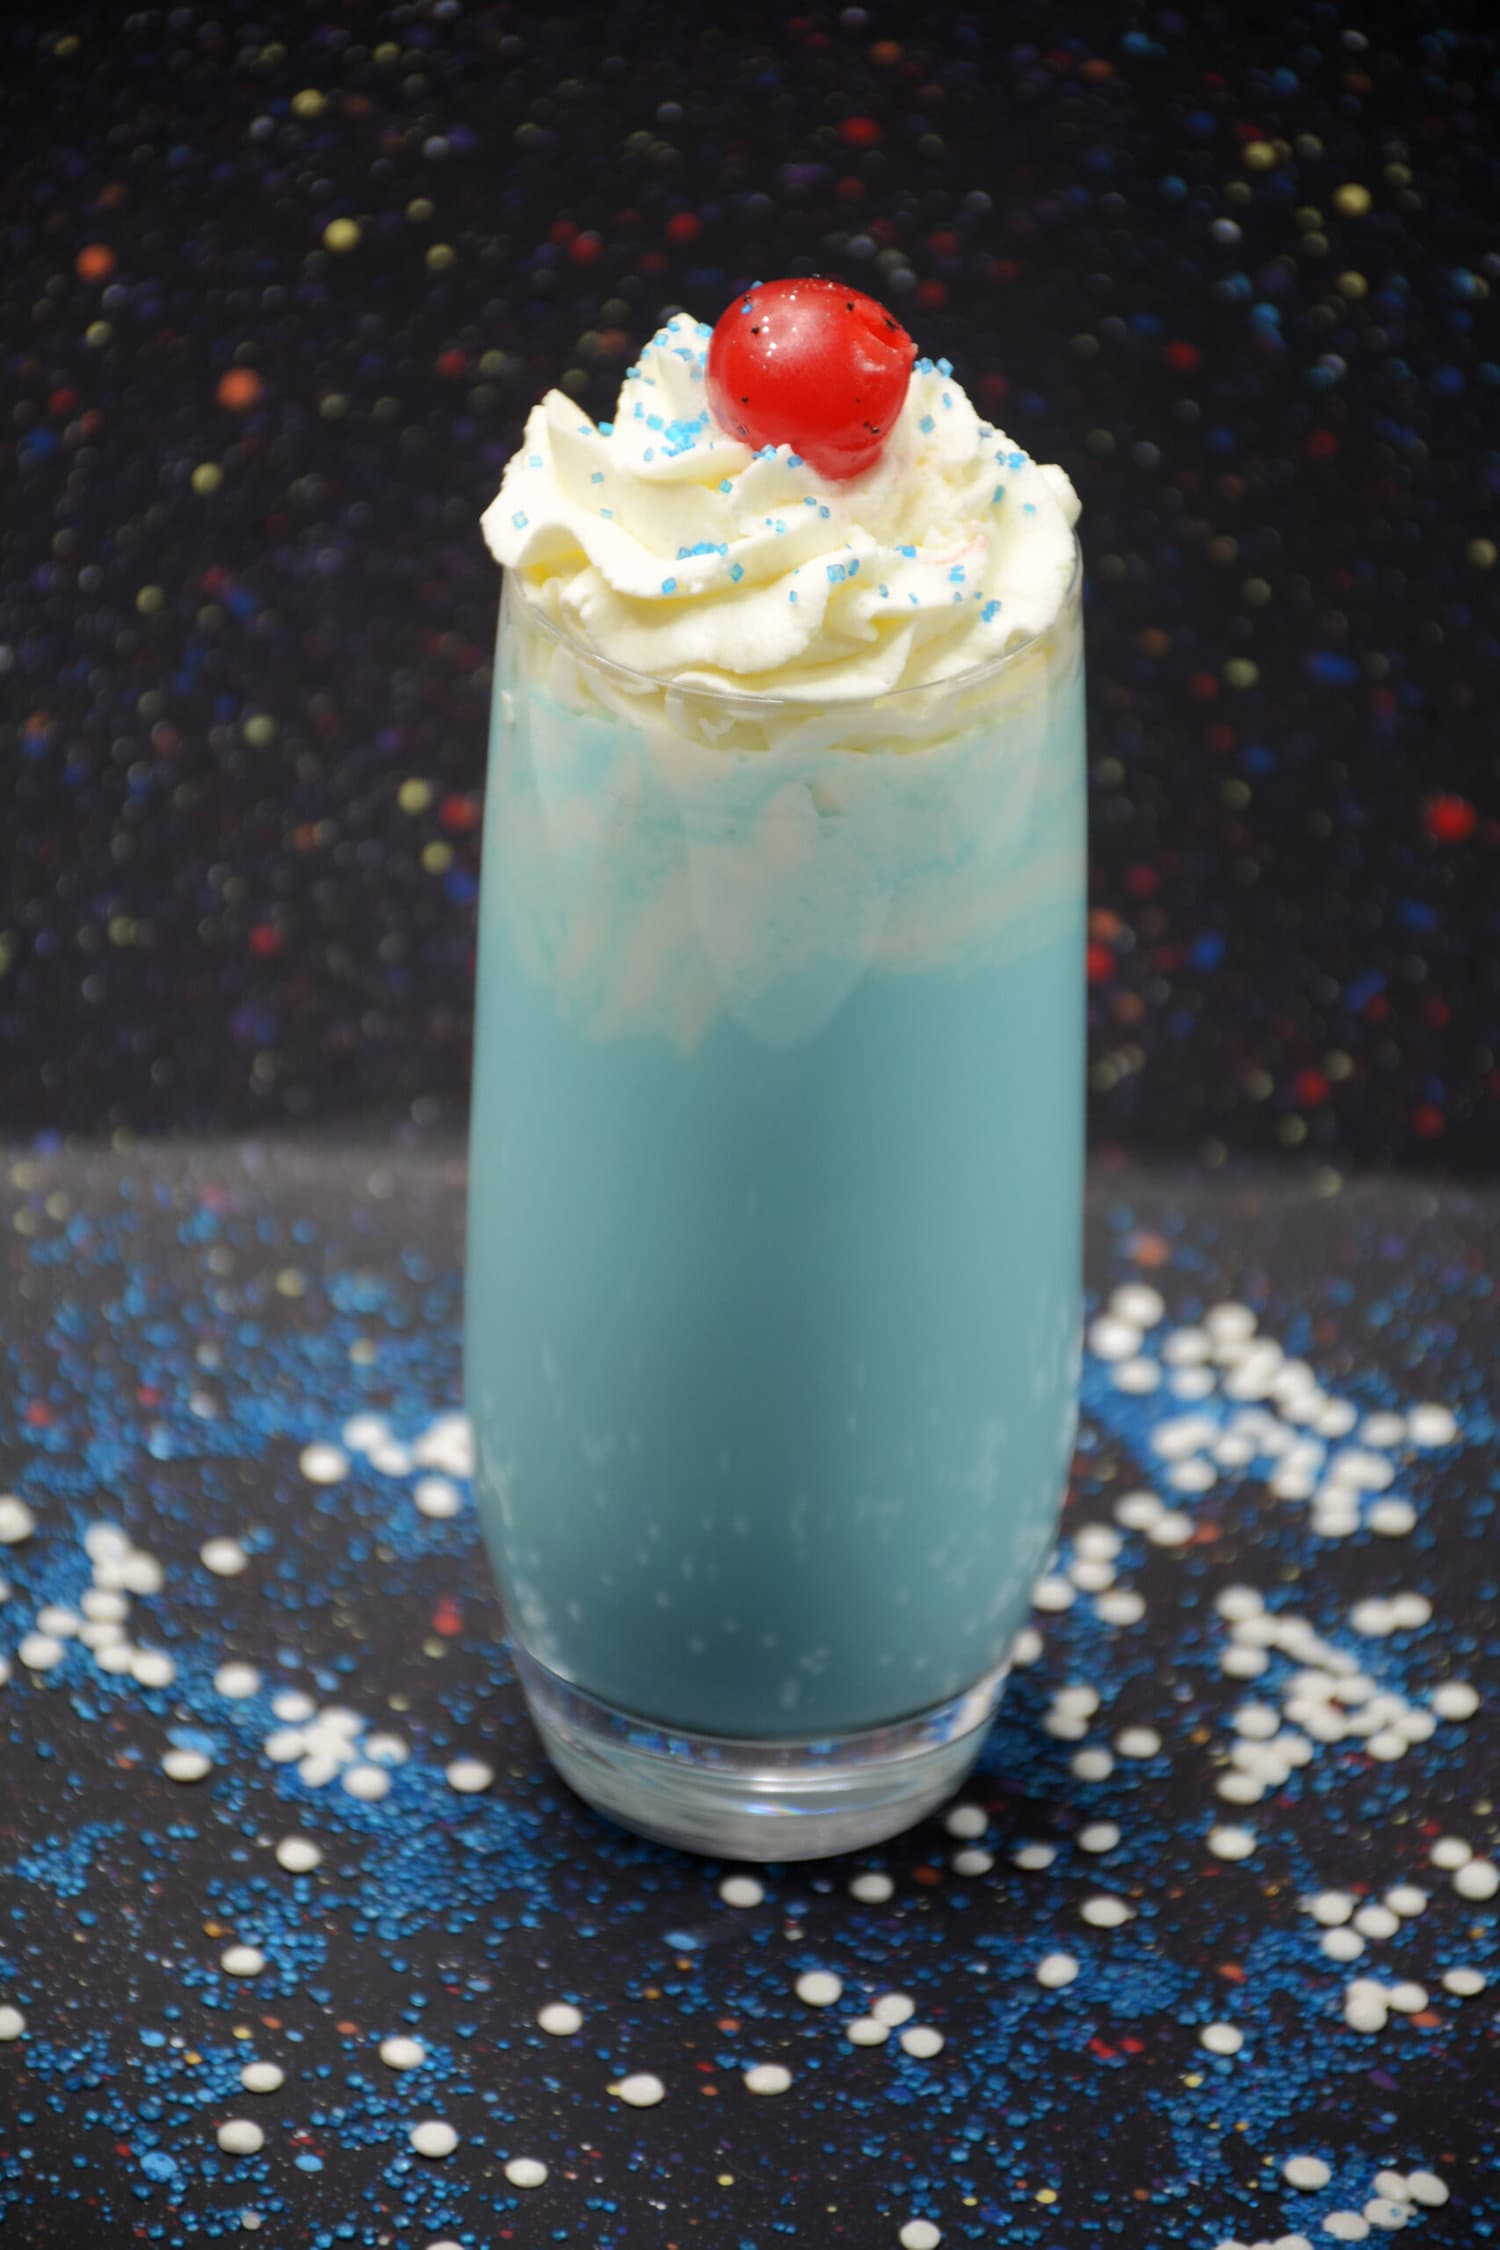 star wars themed blue milkshake cocktail drink